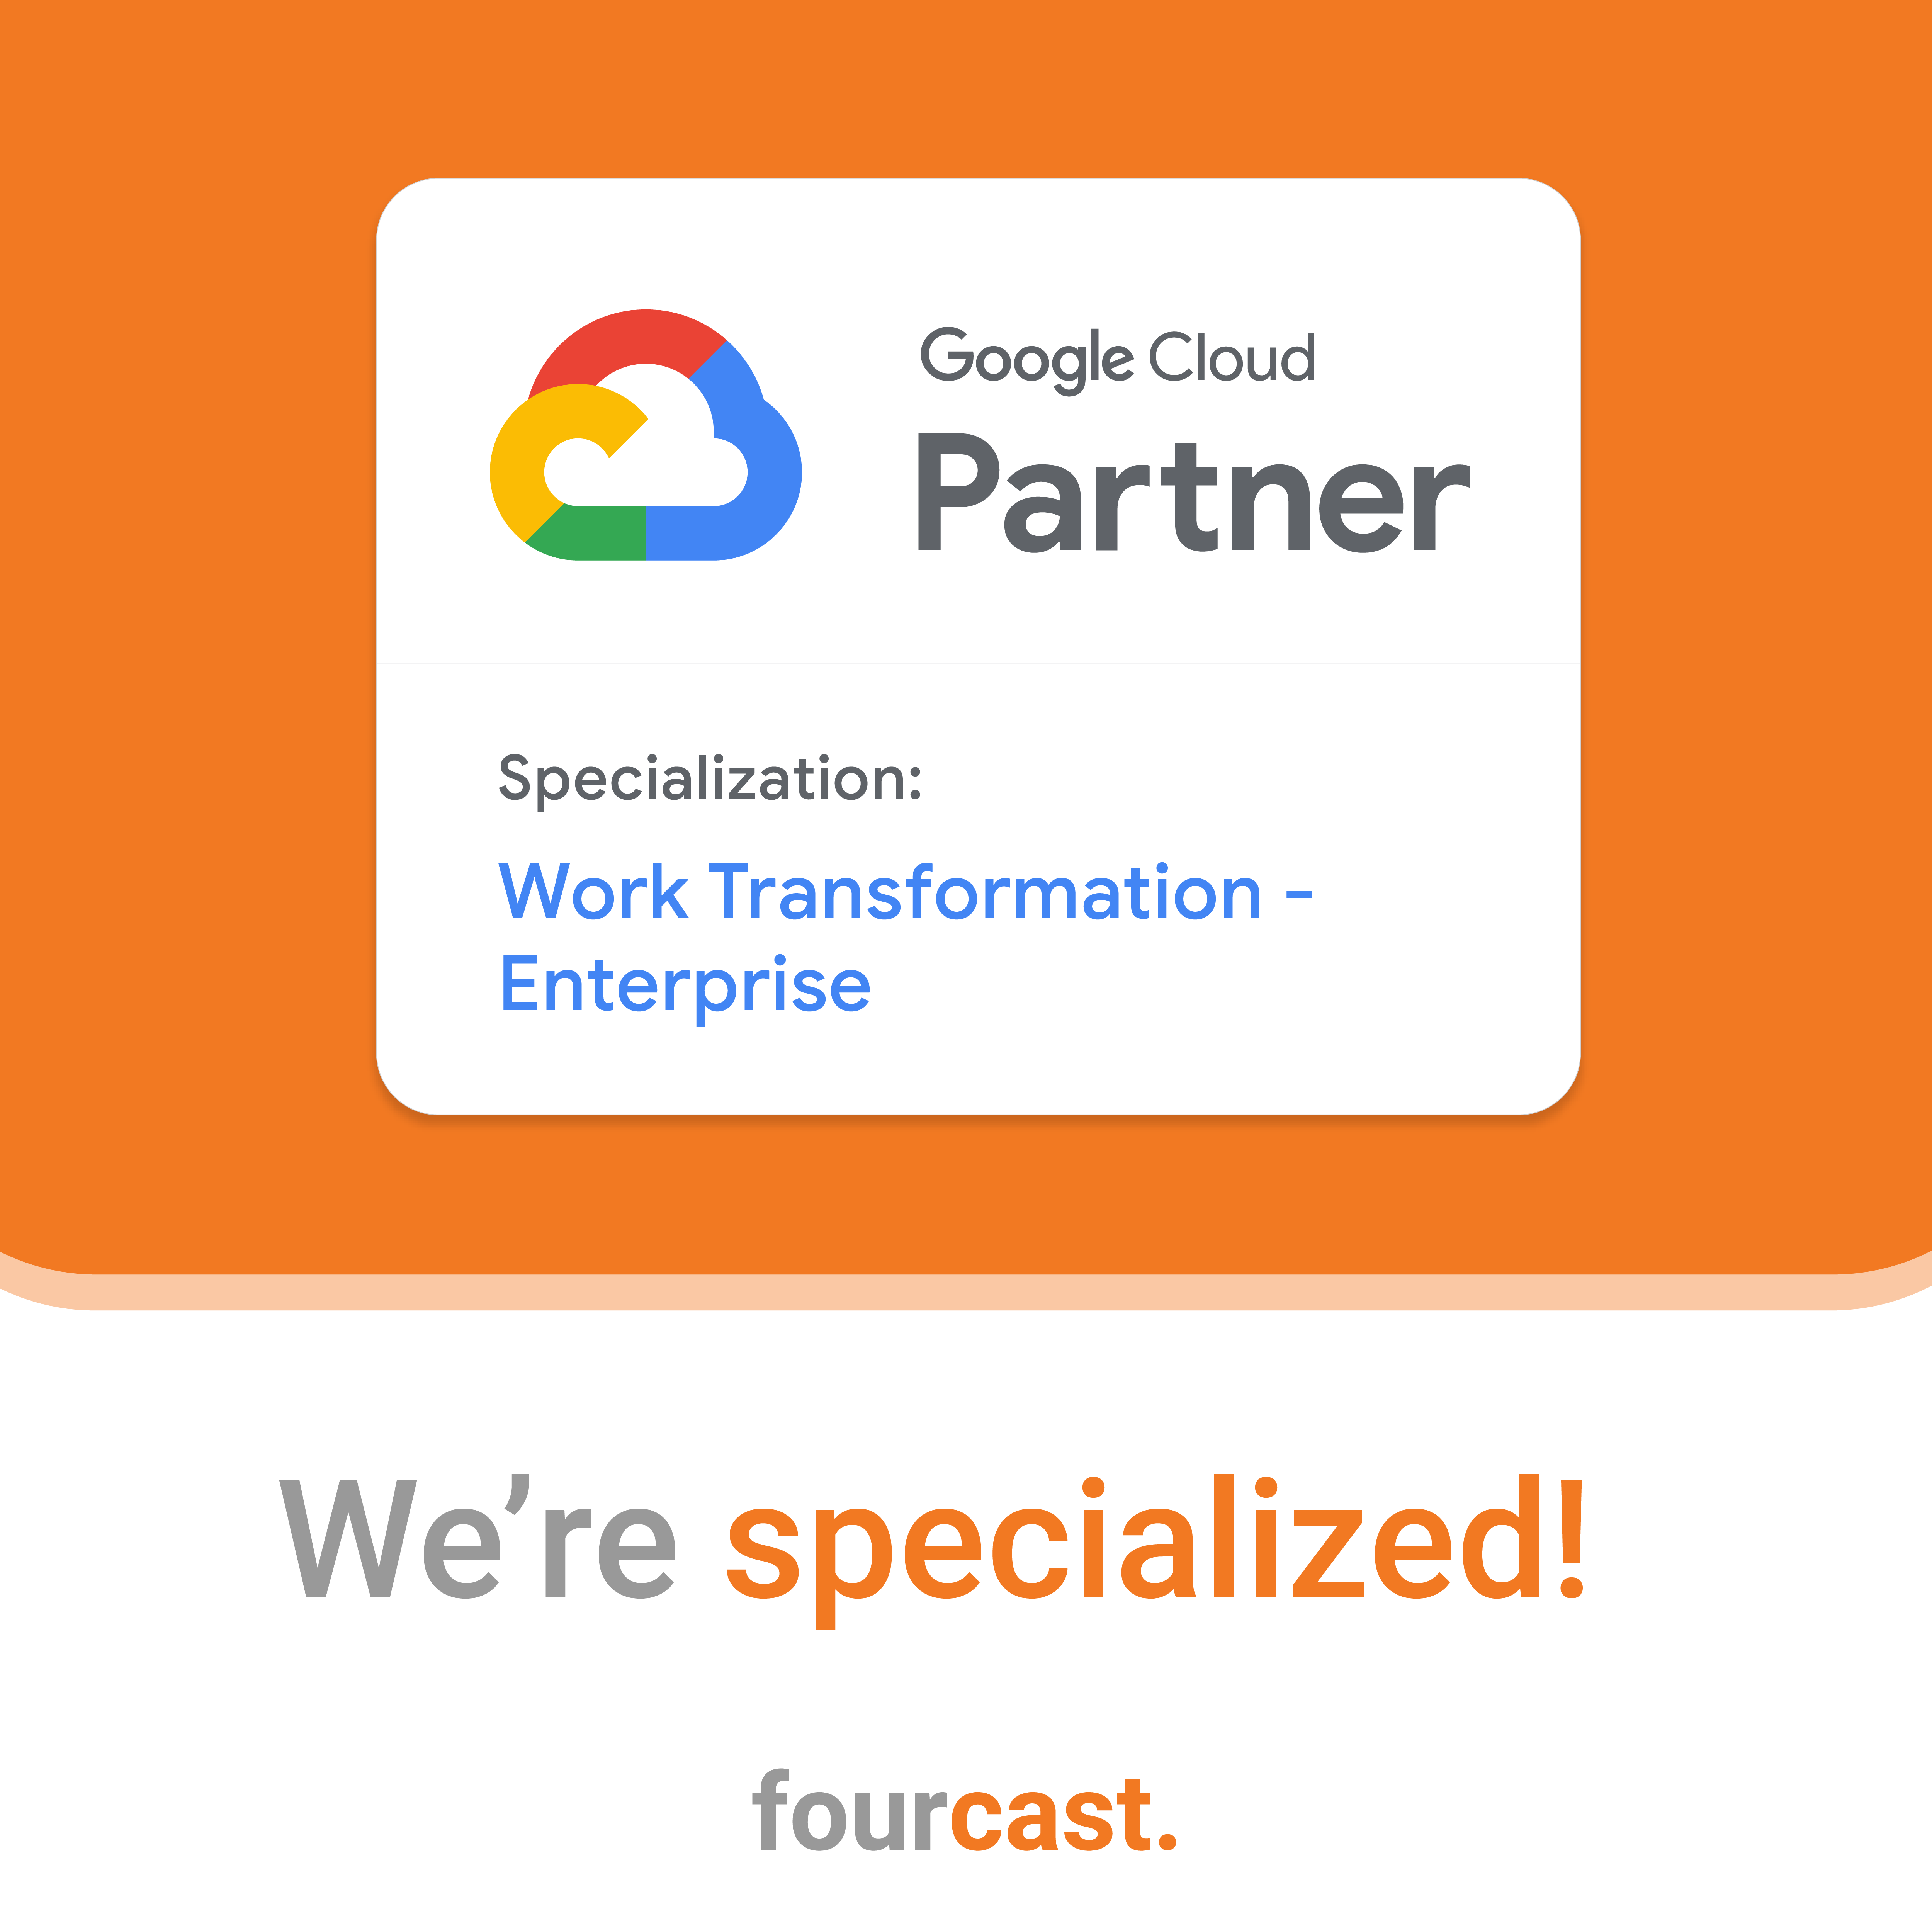 We're specialized Google Cloud partner - Work Transformation Enterprise